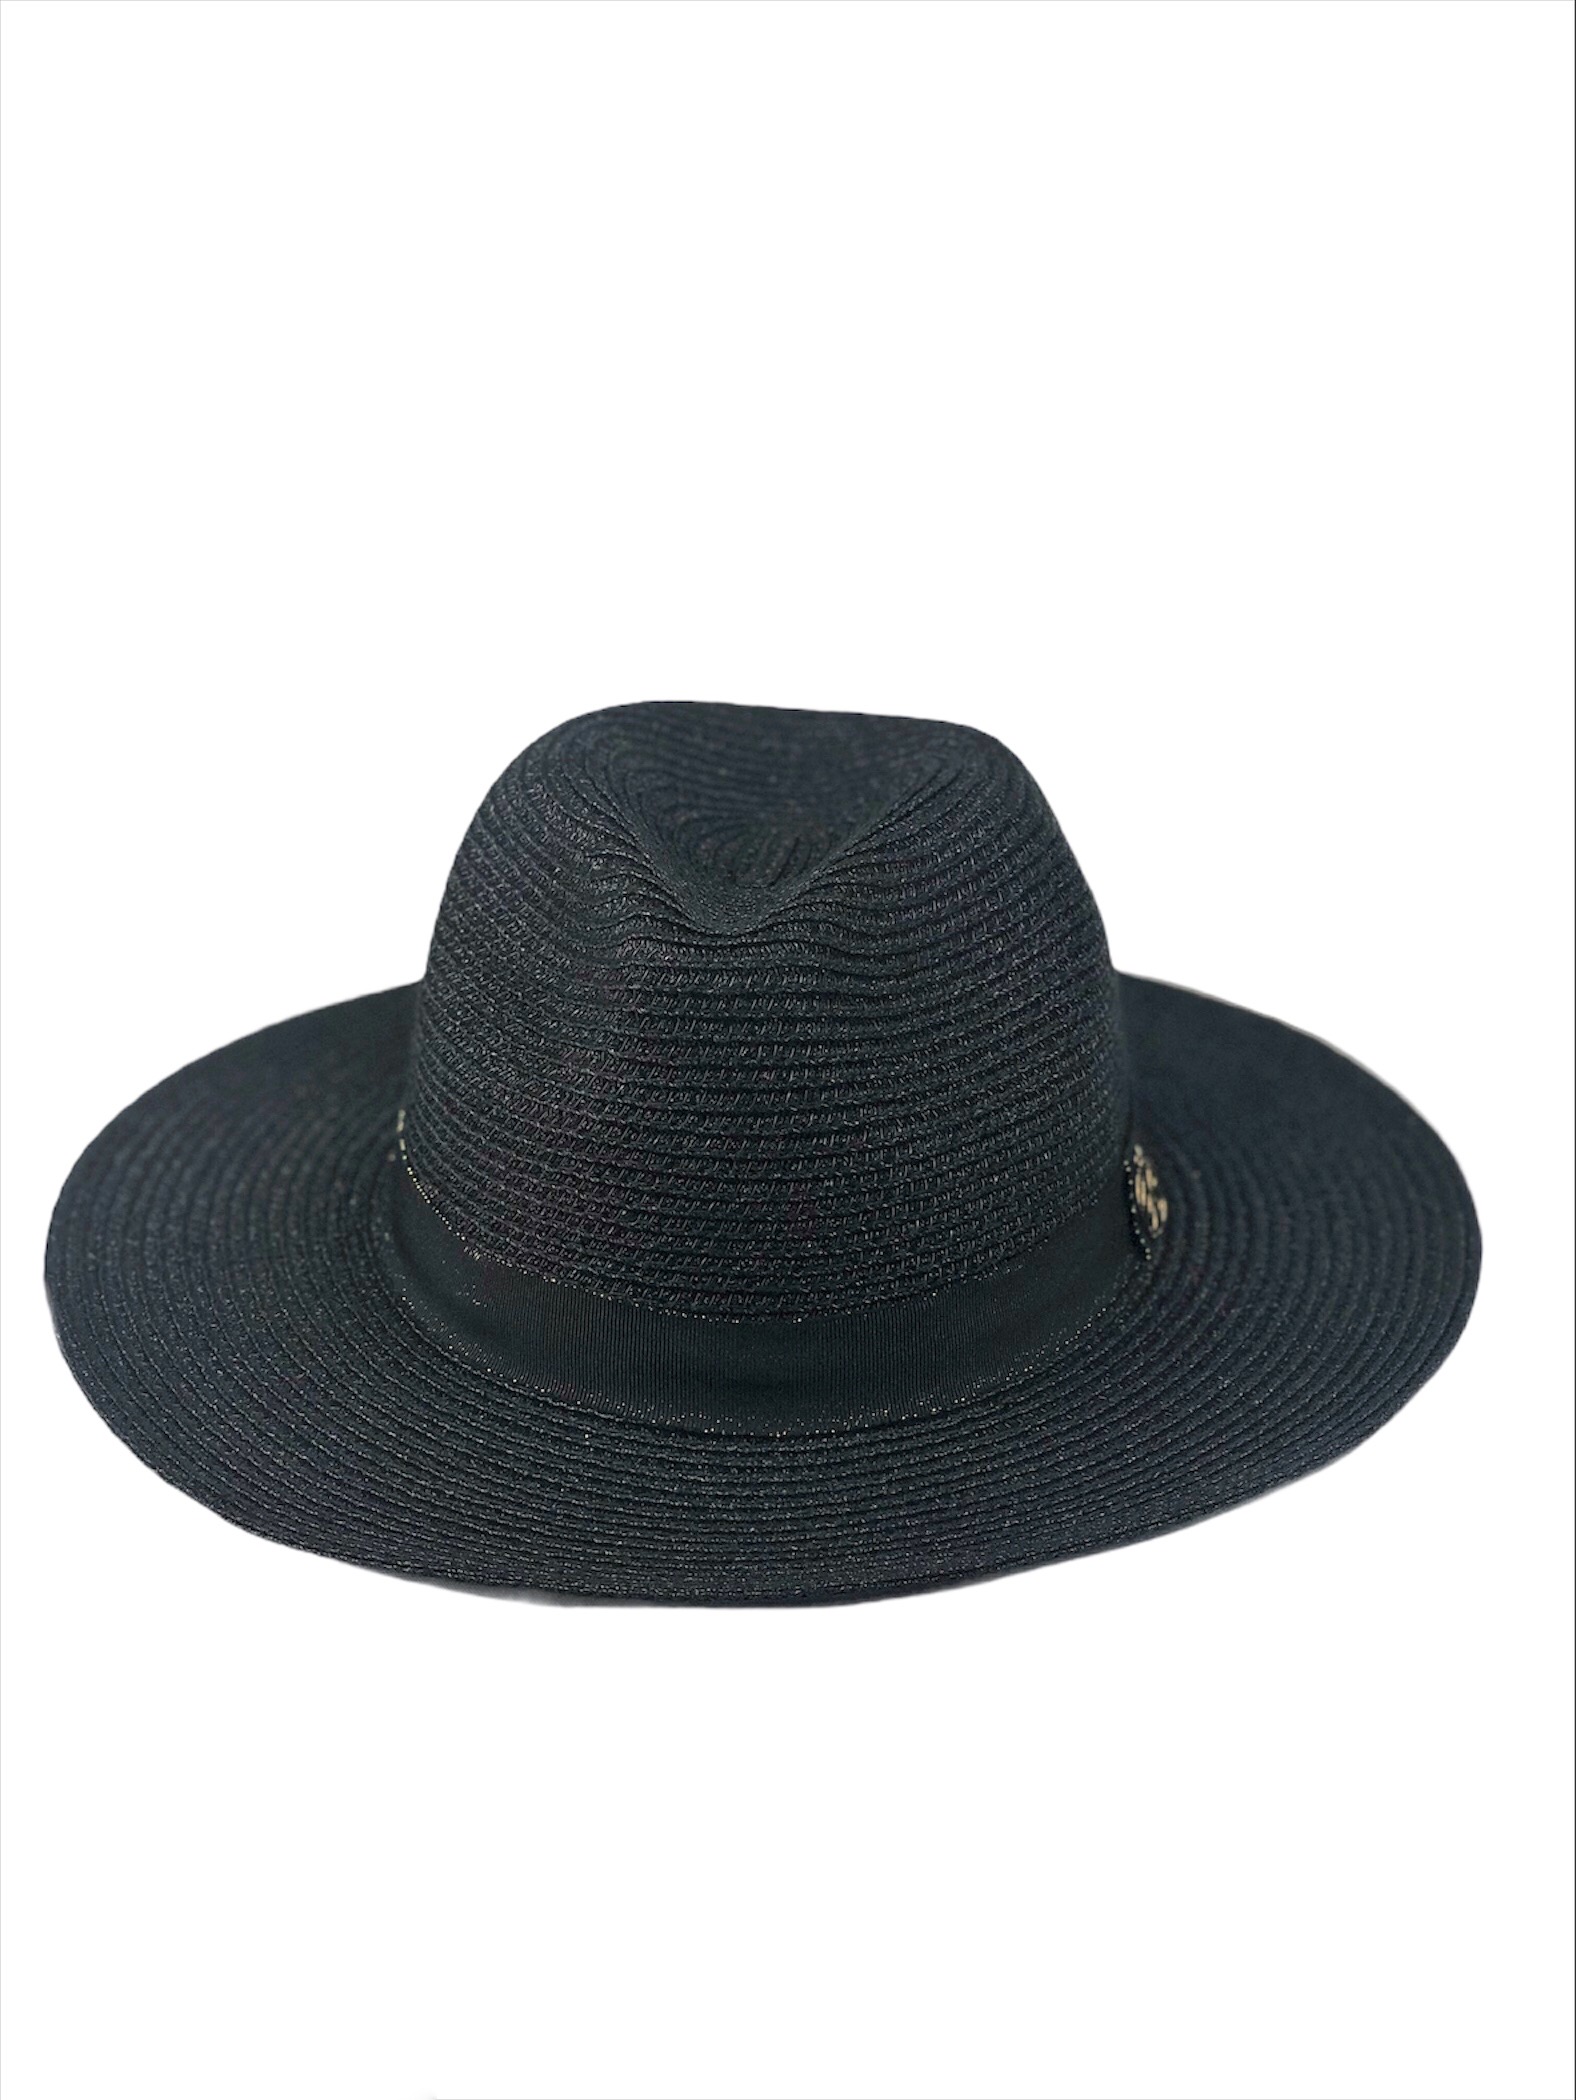 Шляпа черная с широкими полями